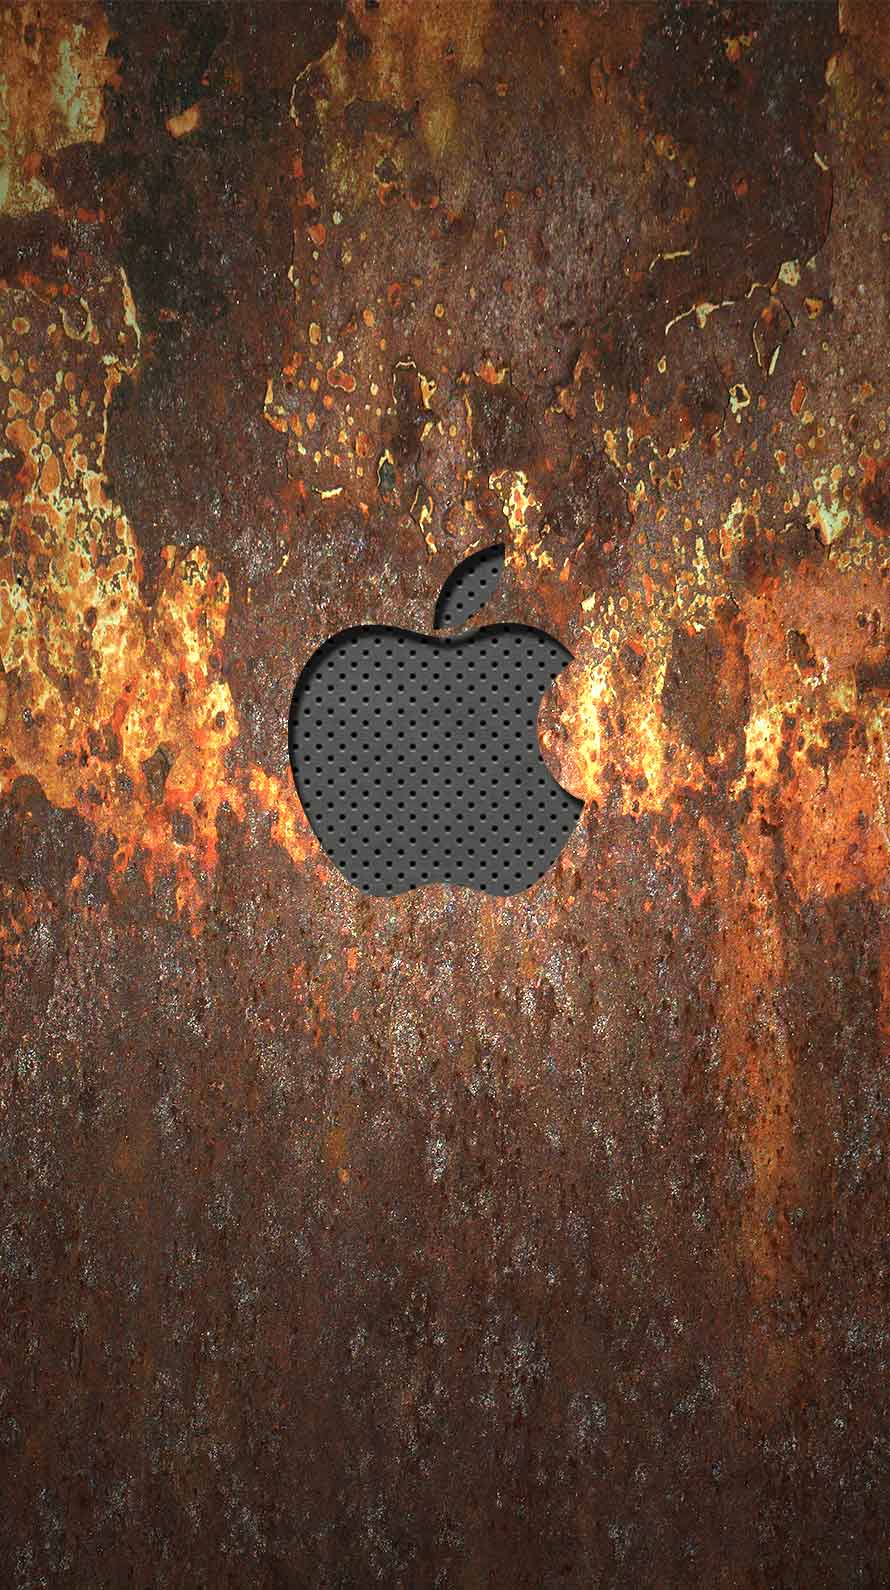 Iphone用 錆た金属とメタルで廃工場風のオリジナル壁紙 Appleマーク入り Laboホンテン